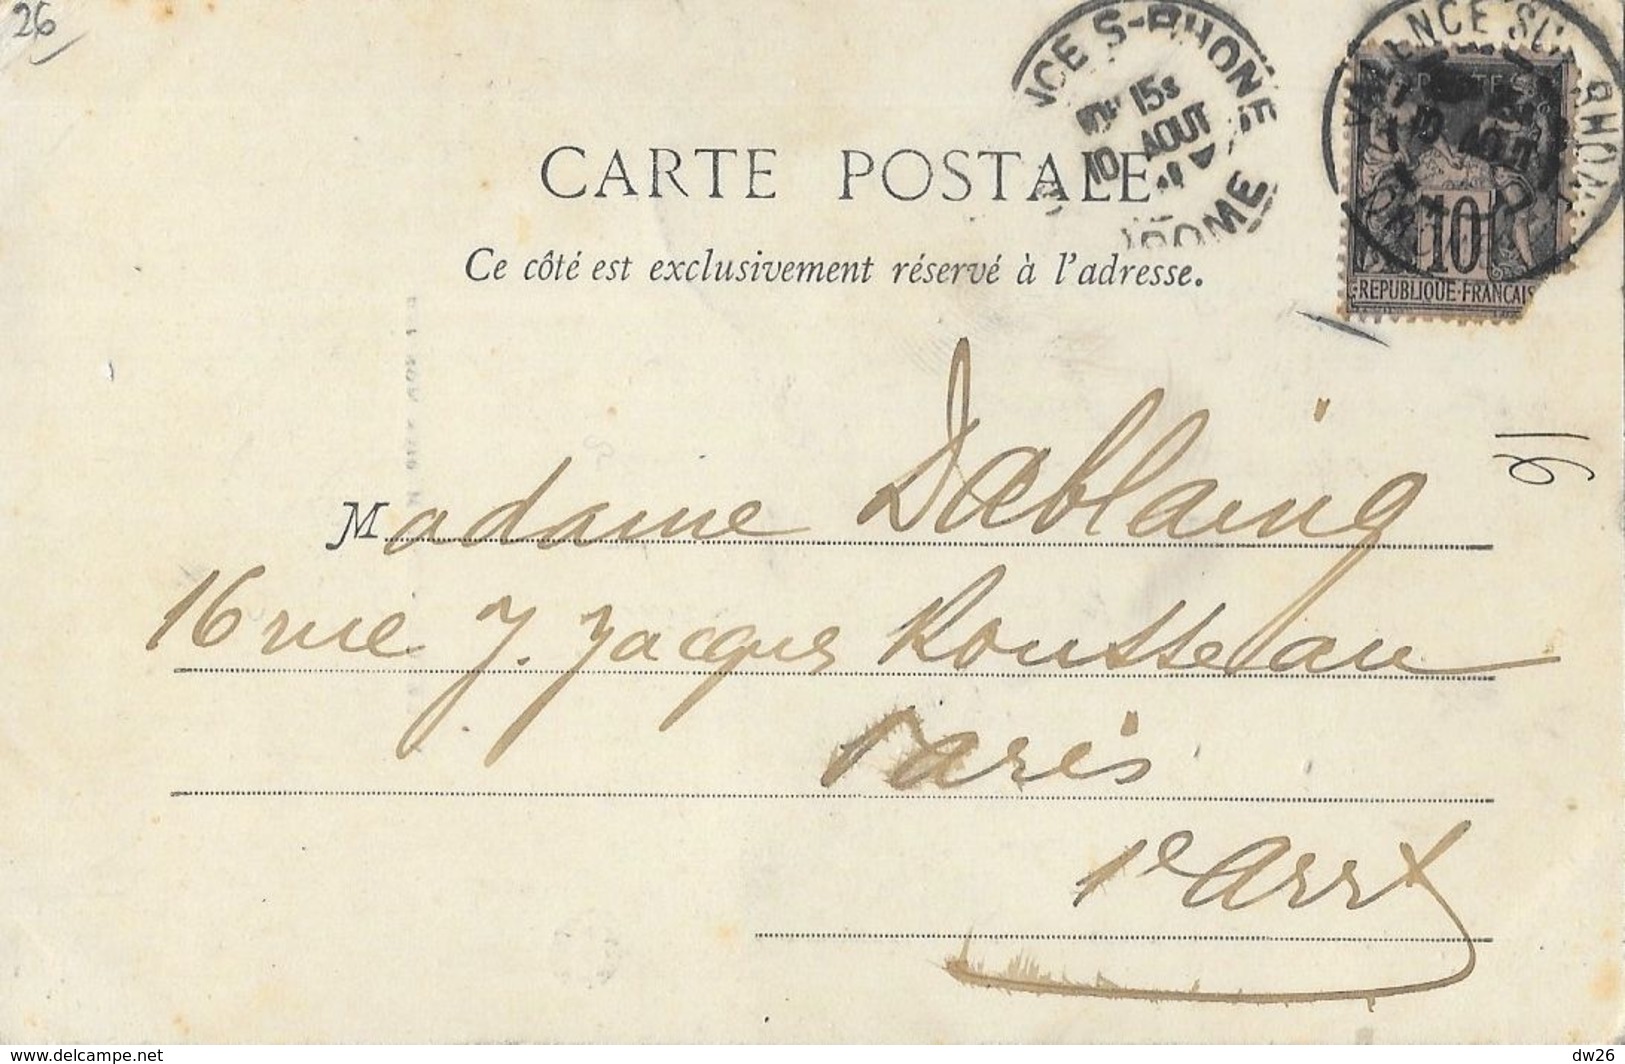 Valence - Rue Madier-Montjau , Commerces - Edition A.B. & Cie - Carte Dos Simple De 1901 - Valence